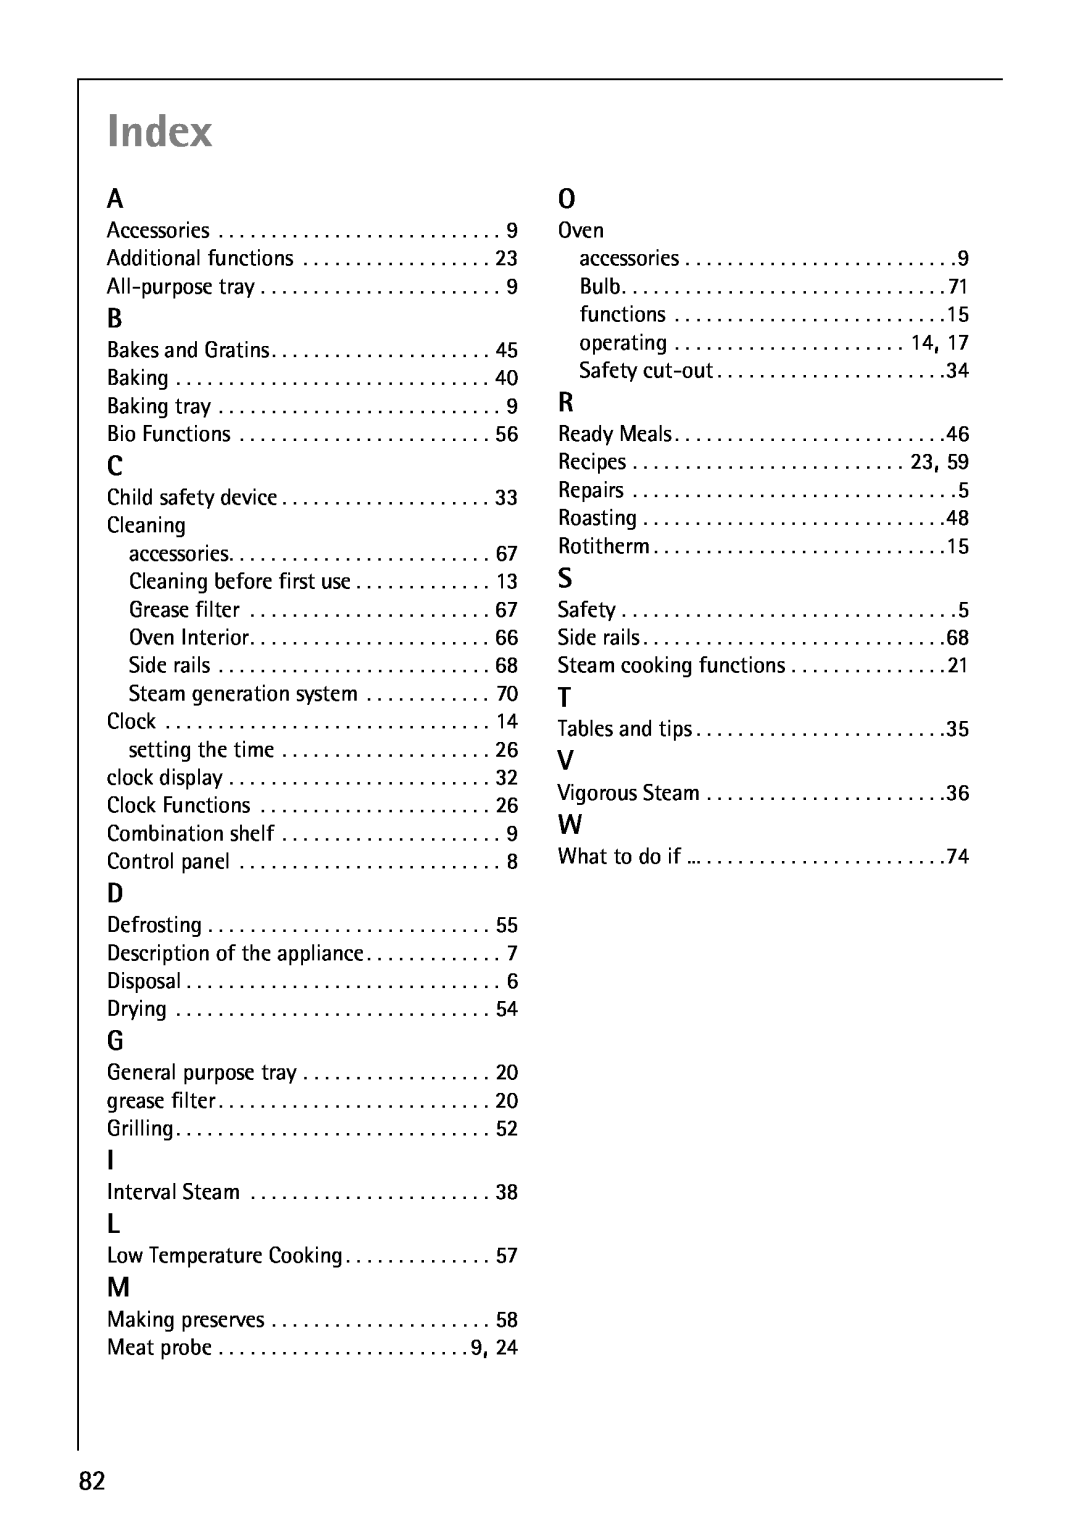 AEG B8920-1 manual Index 